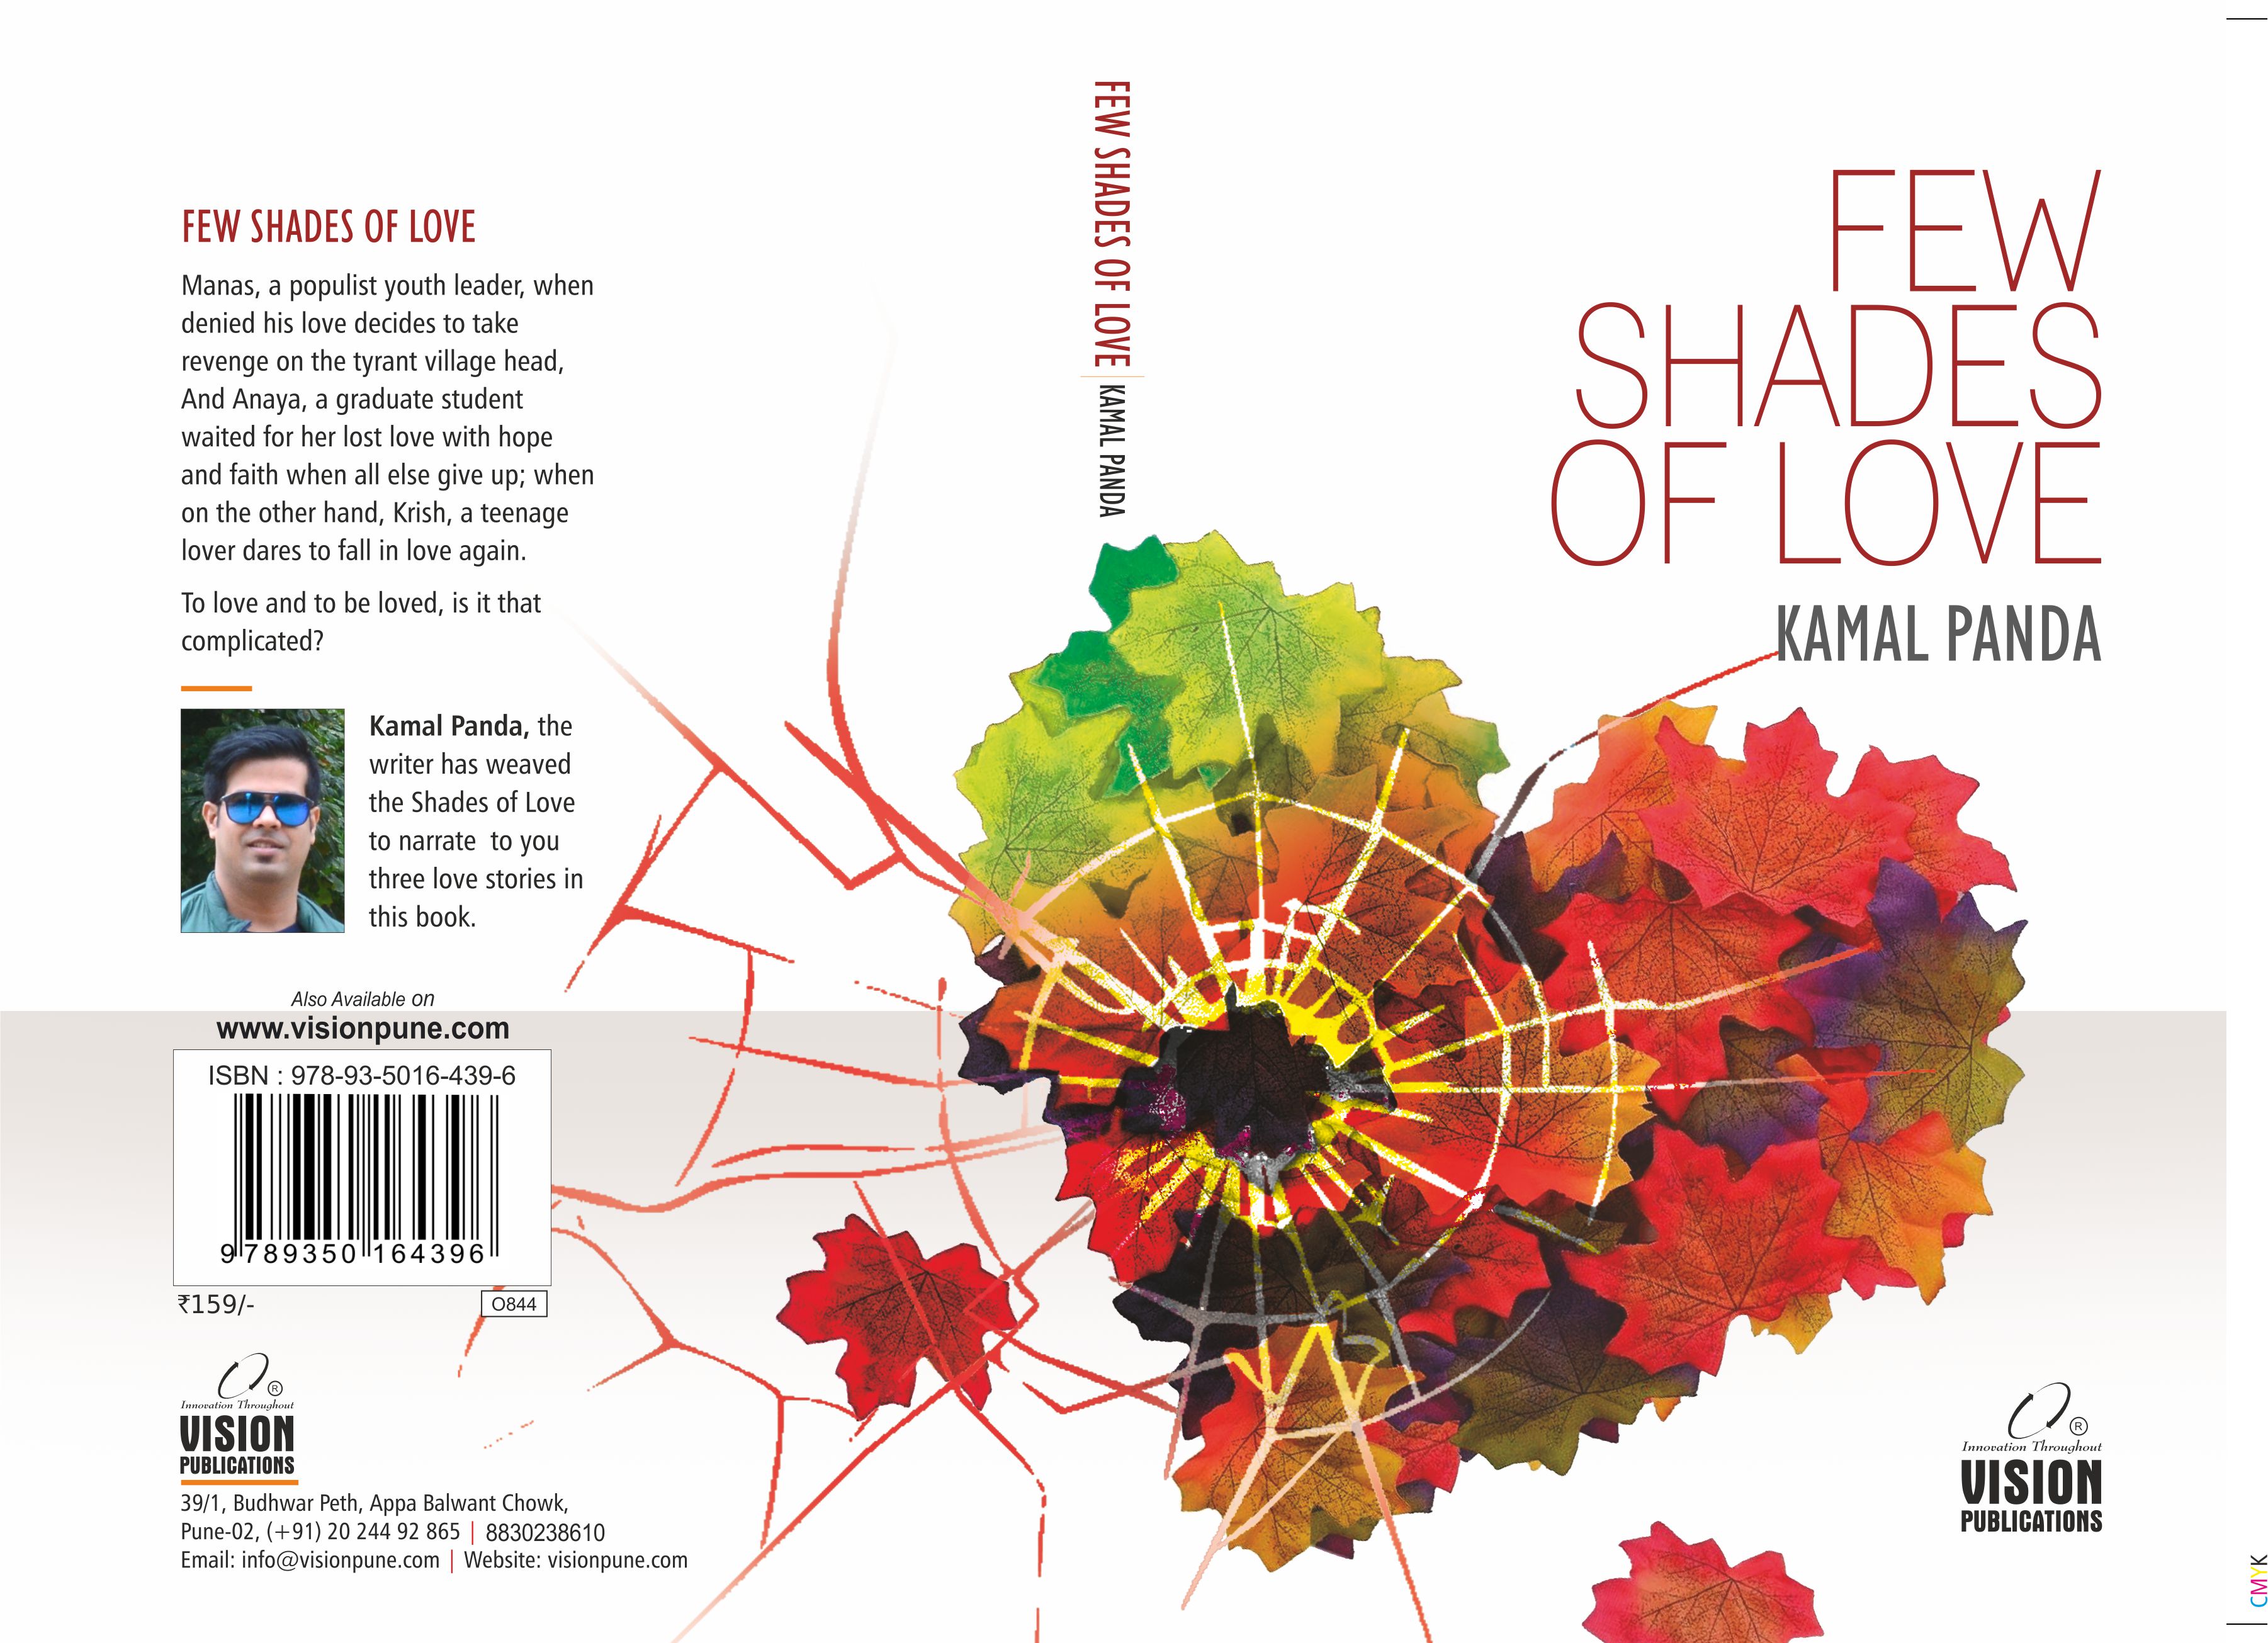 'FEW SHADES OF LOVE' BY KAMAL PANDA